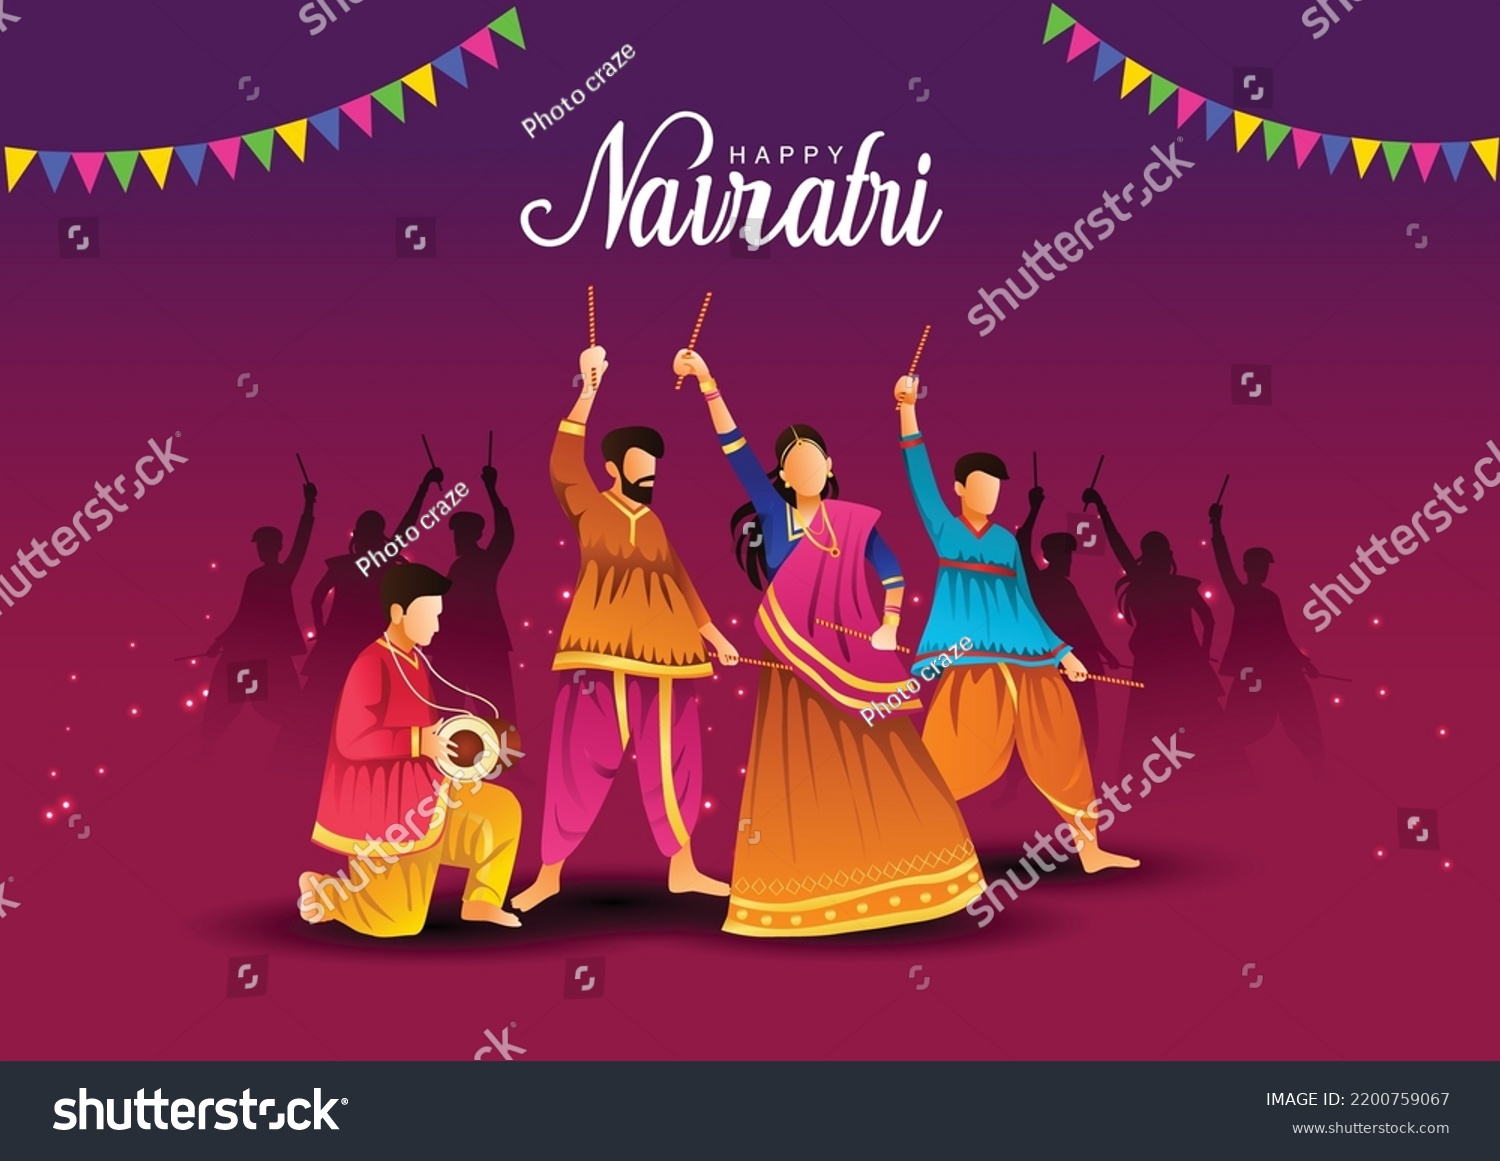 SVG of Garba Night poster for Navratri Dussehra festival of India. vector illustration design of peoples playing Dandiya dance. svg